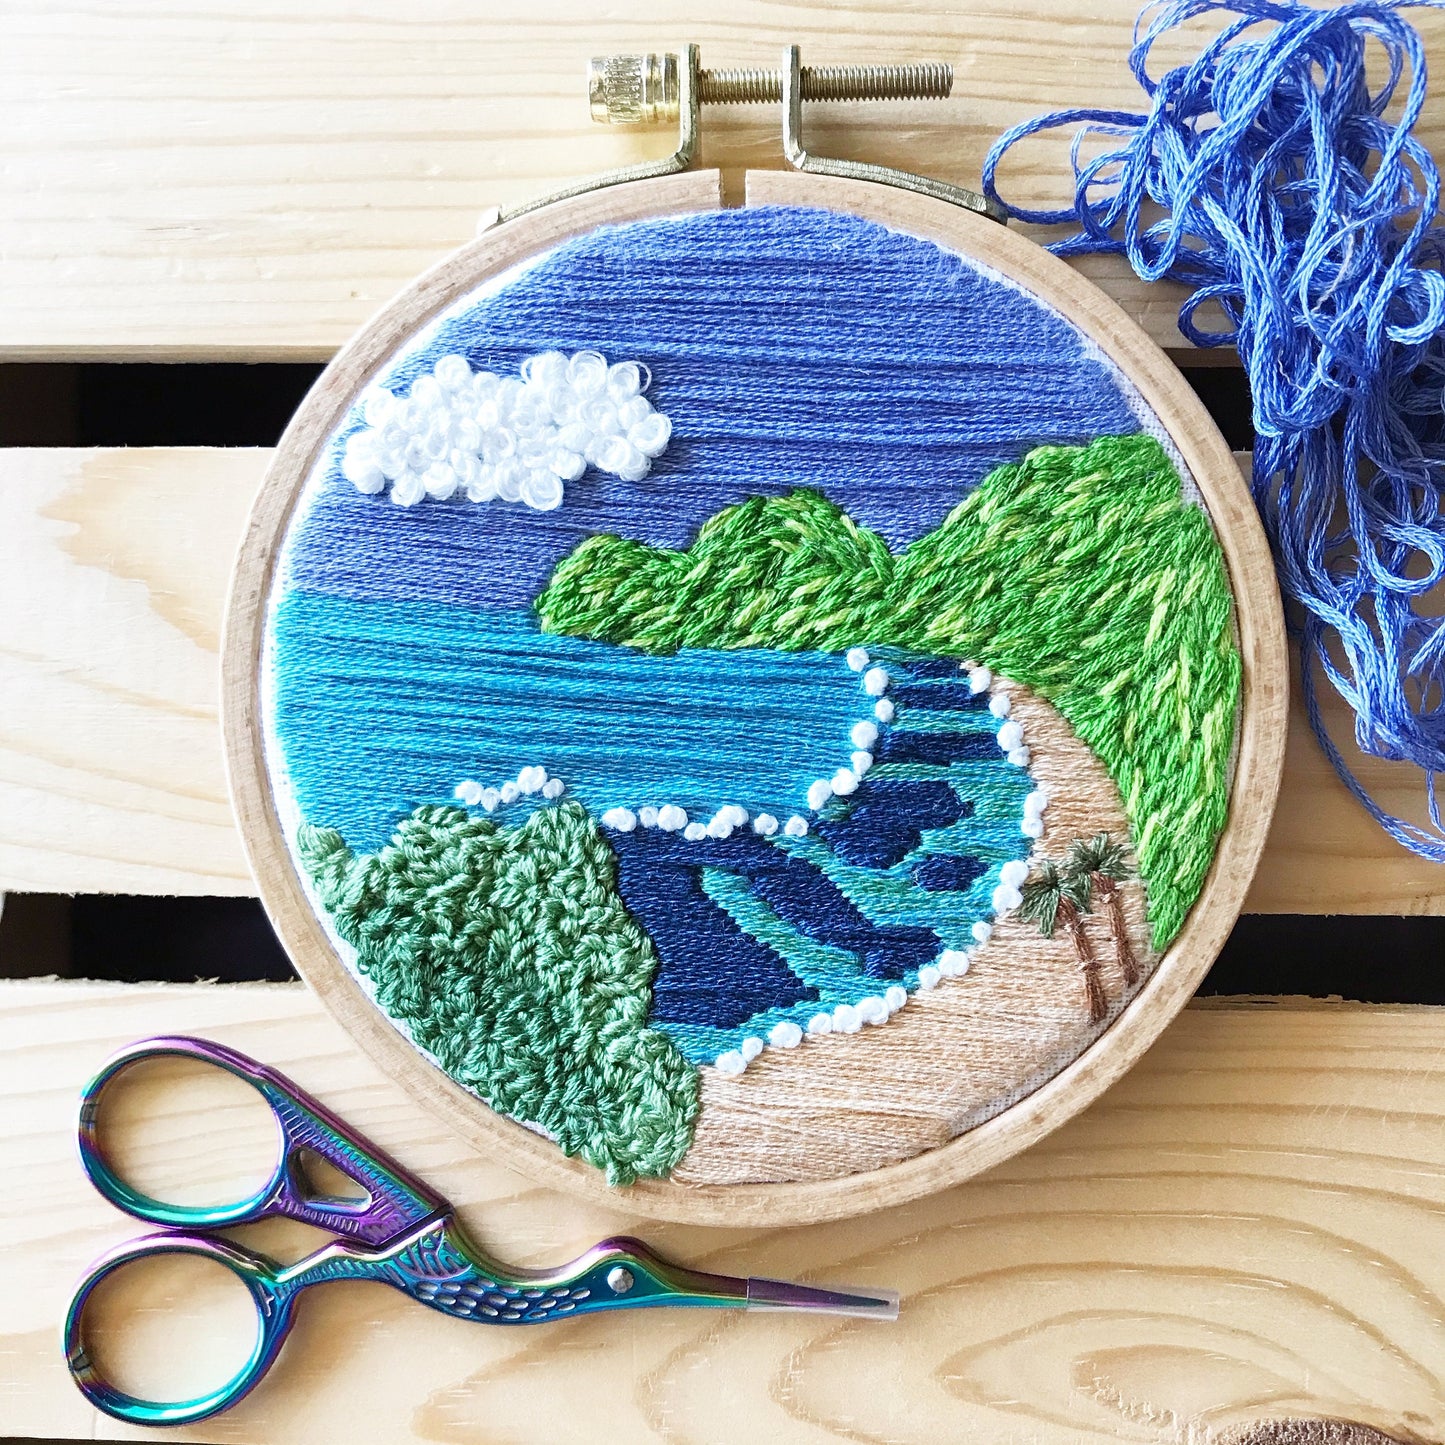 Hanauma Bay: Intermediate Embroidery Kit